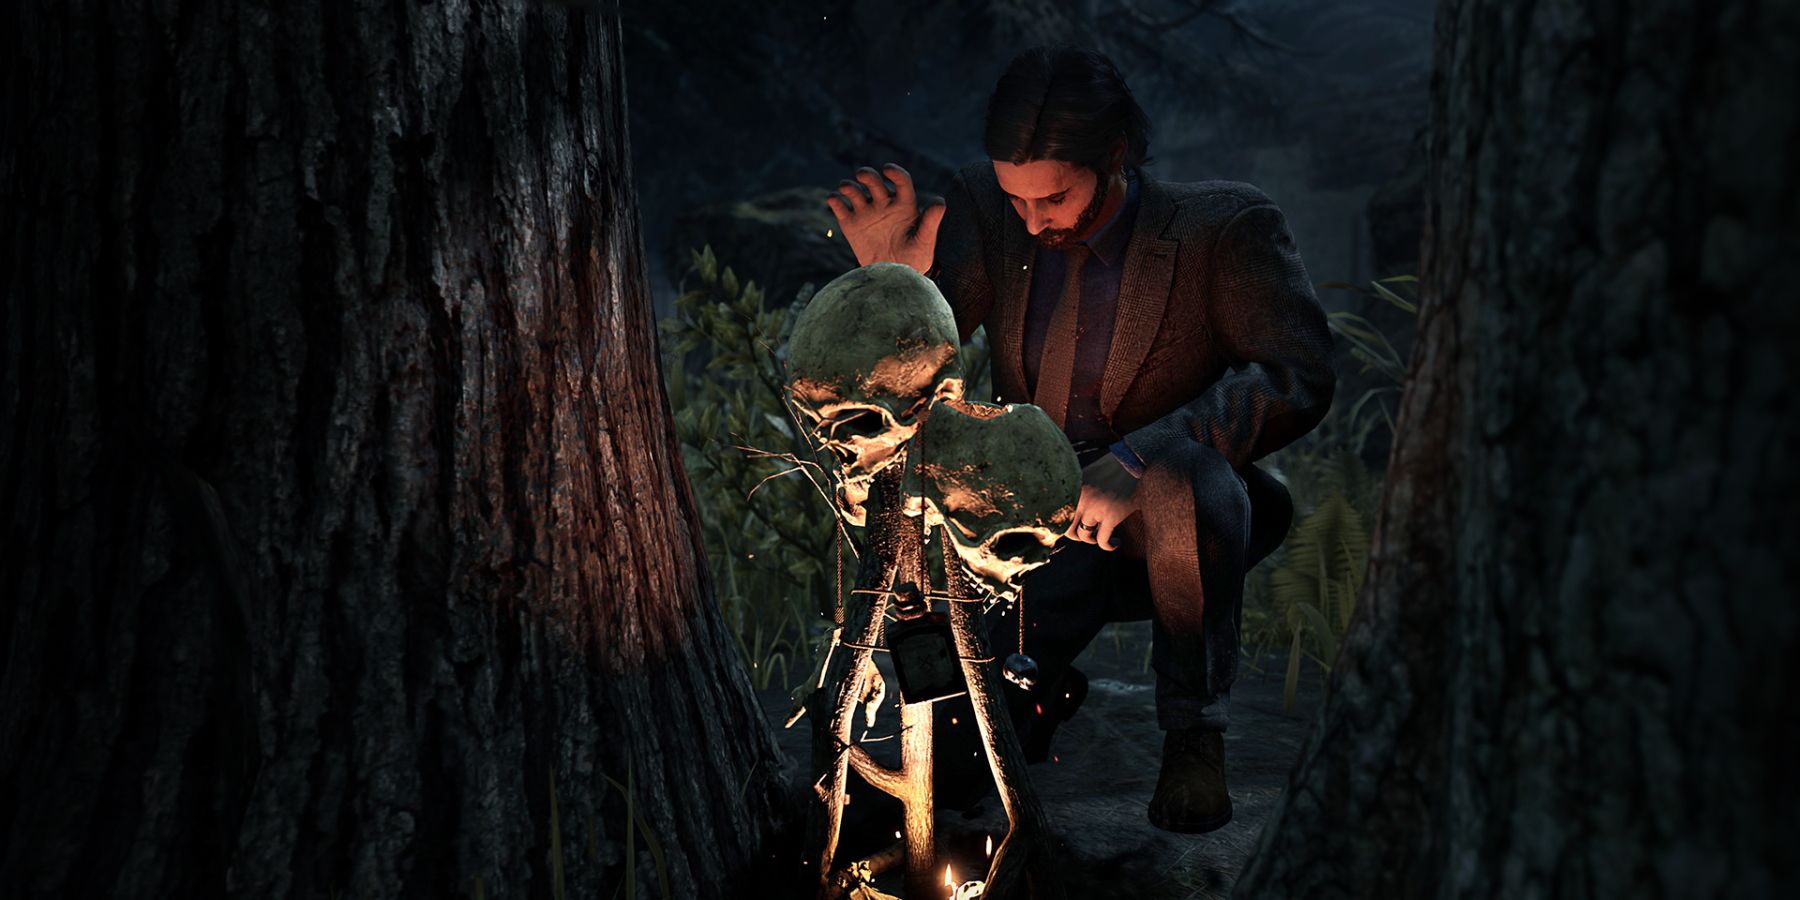 A screenshot from Dead by Daylight's Alan Wake DLC, showing Alan Wake using his "Illumination" Boon.